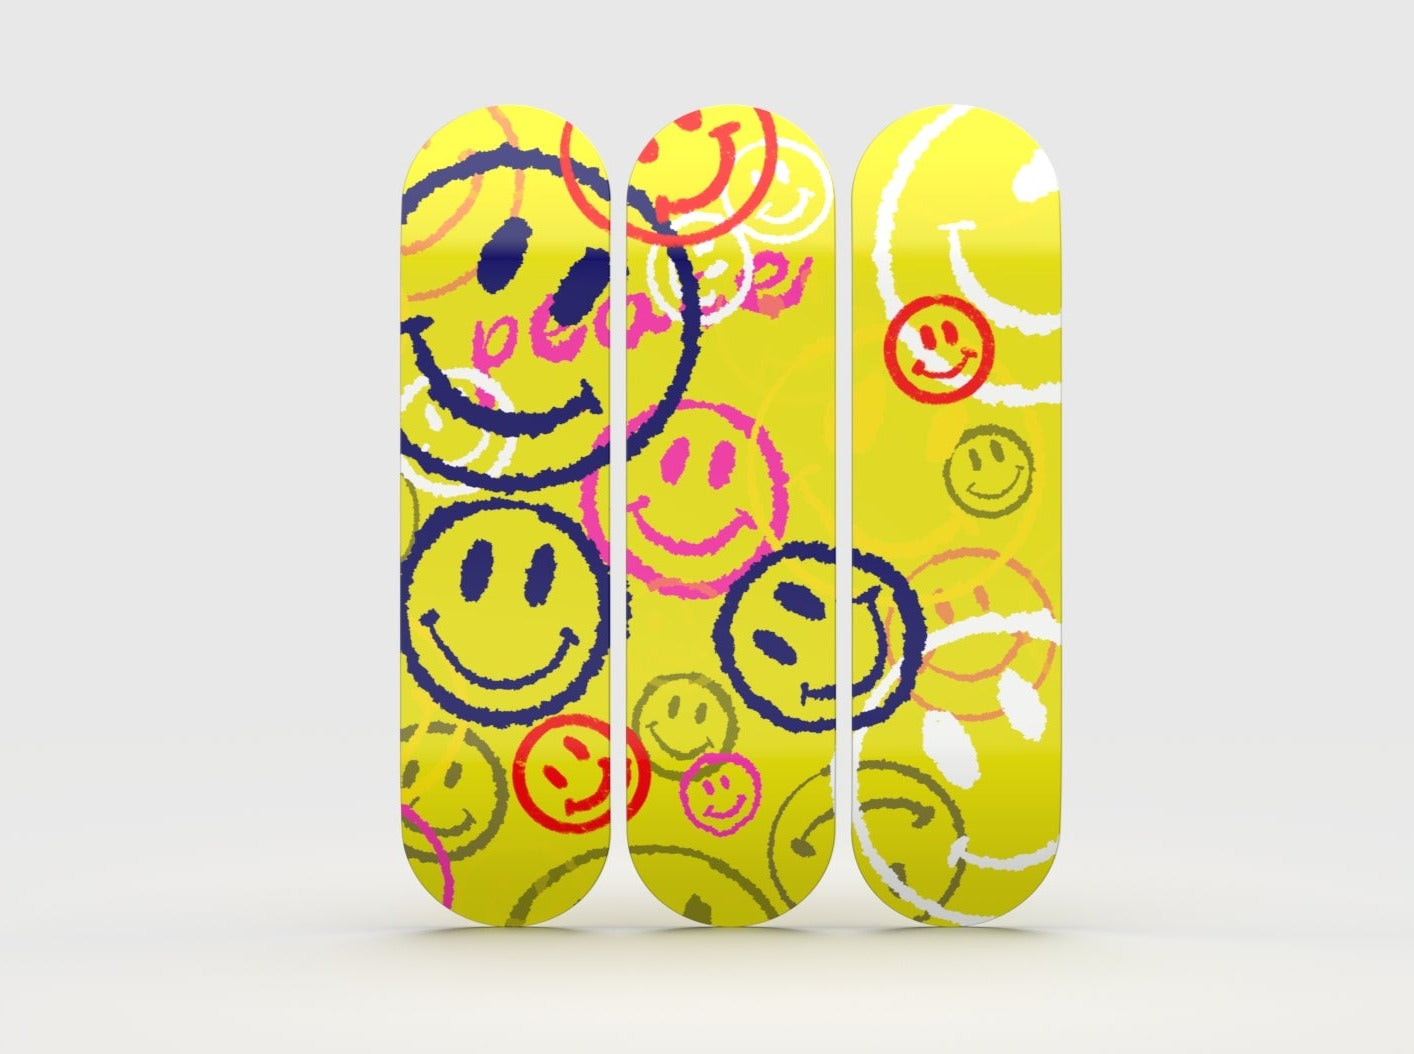 Wall Art of Smiley Party Skateboard Design in Acrylic Glass - Pop Art